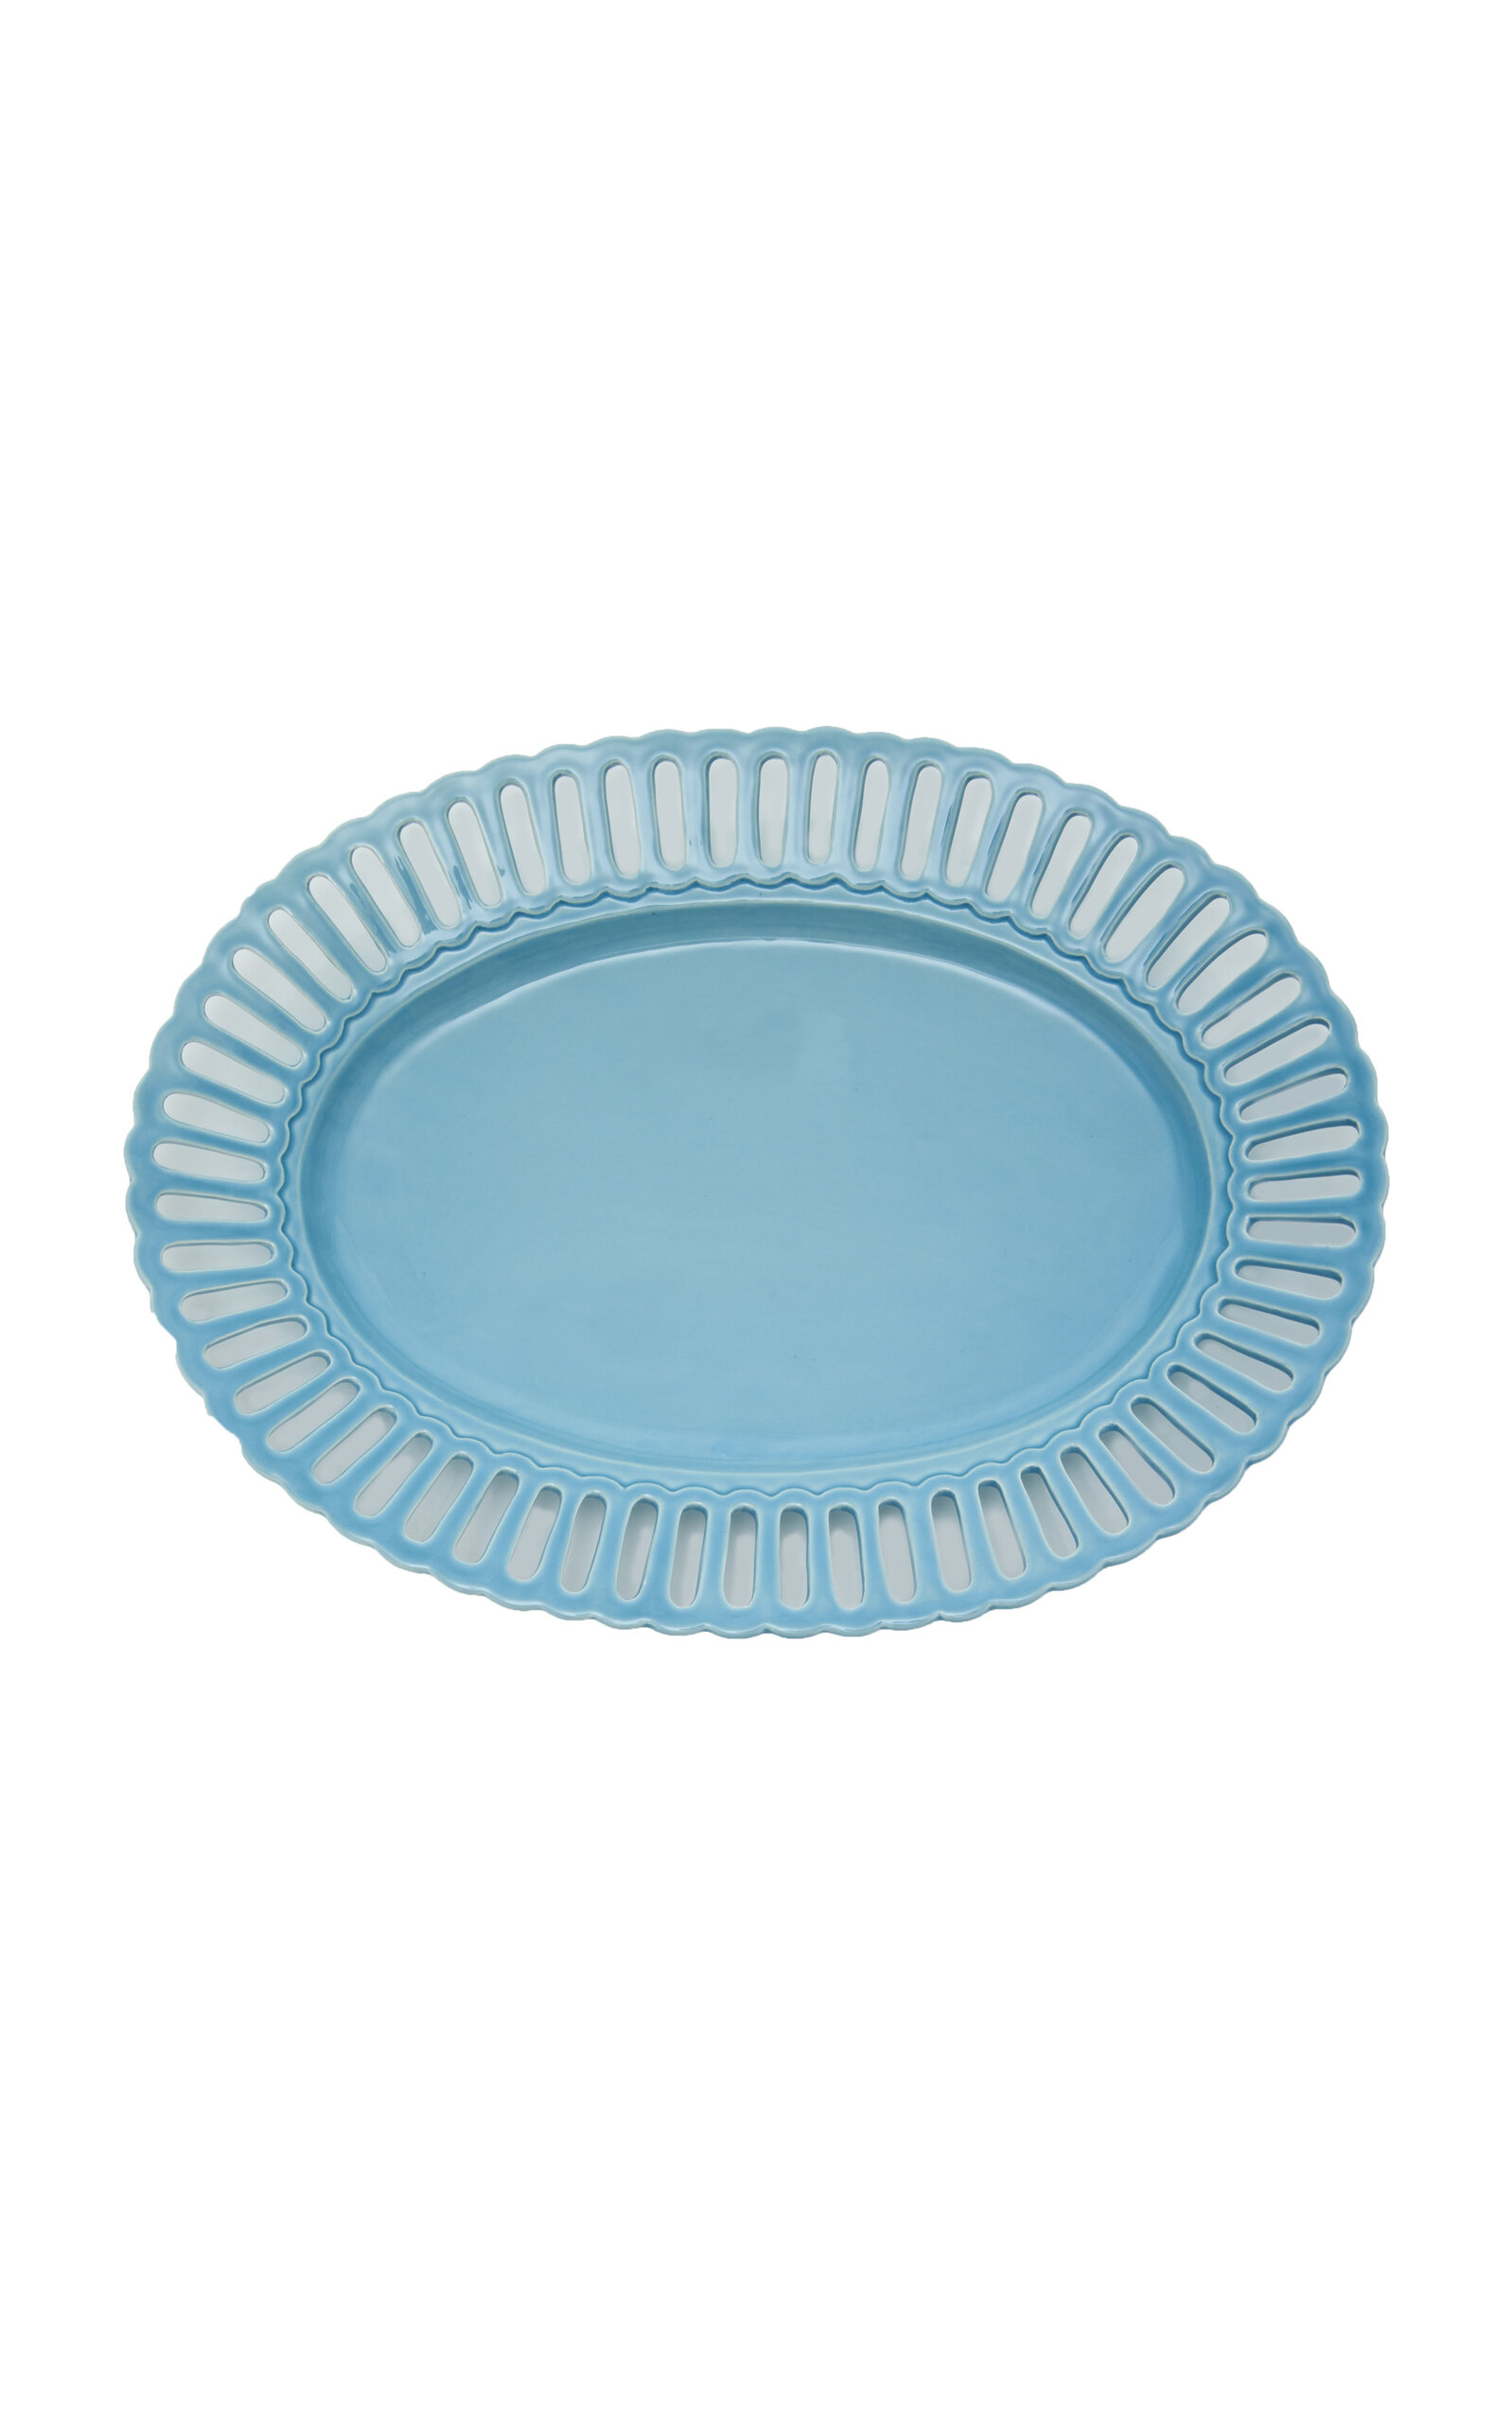 Moda Domus Balconata Creamware Serving Tray In Blue